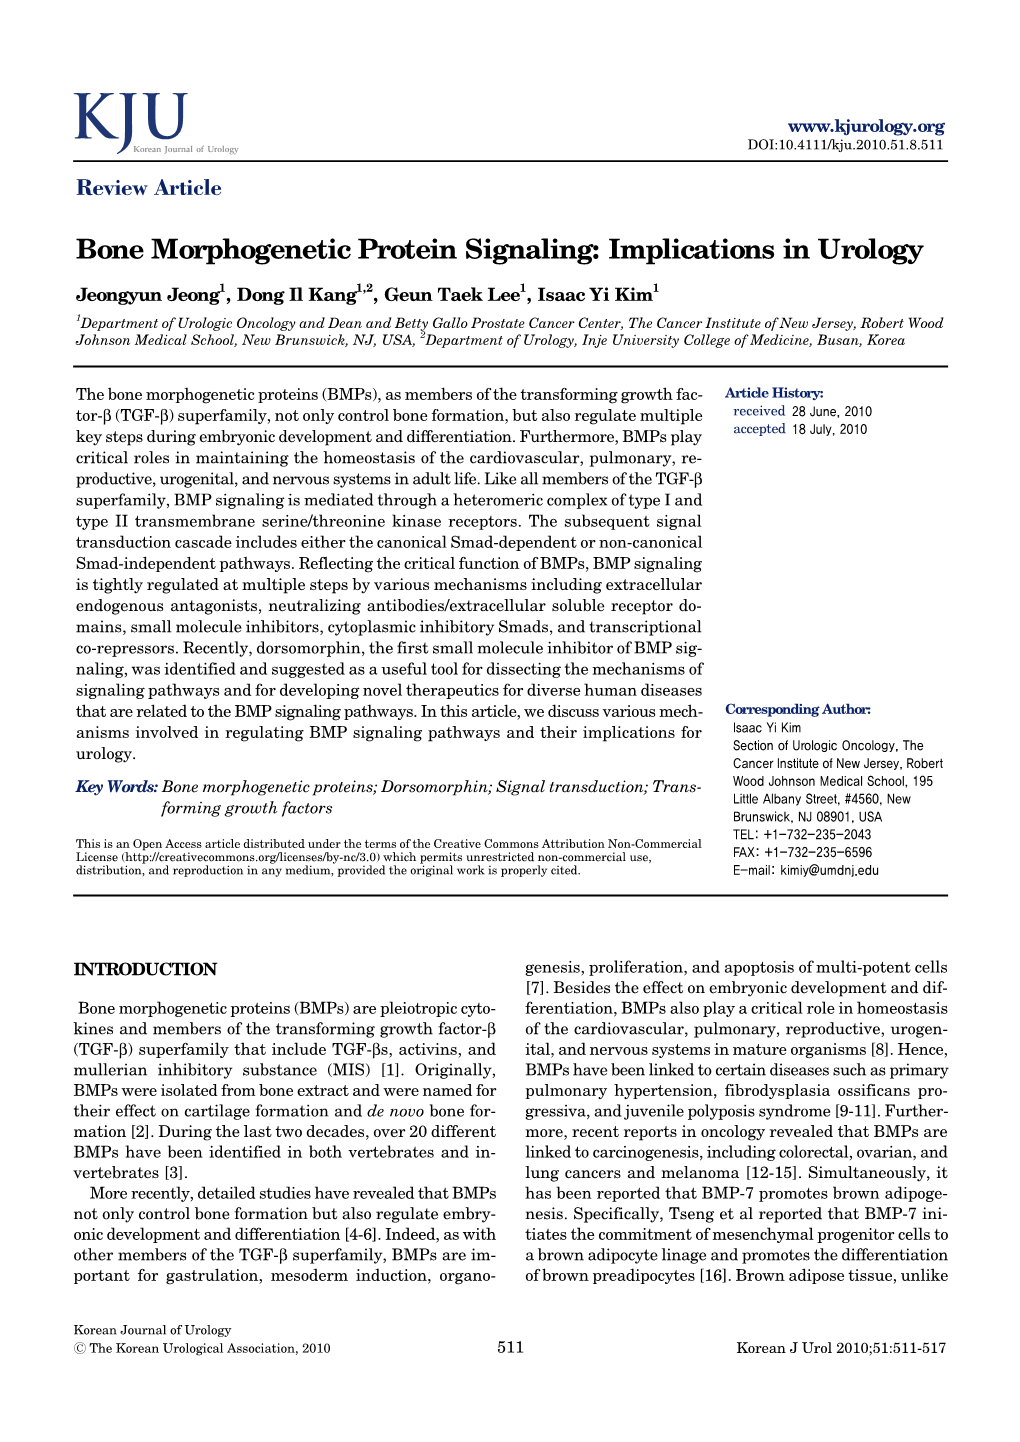 Bone Morphogenetic Protein Signaling: Implications in Urology